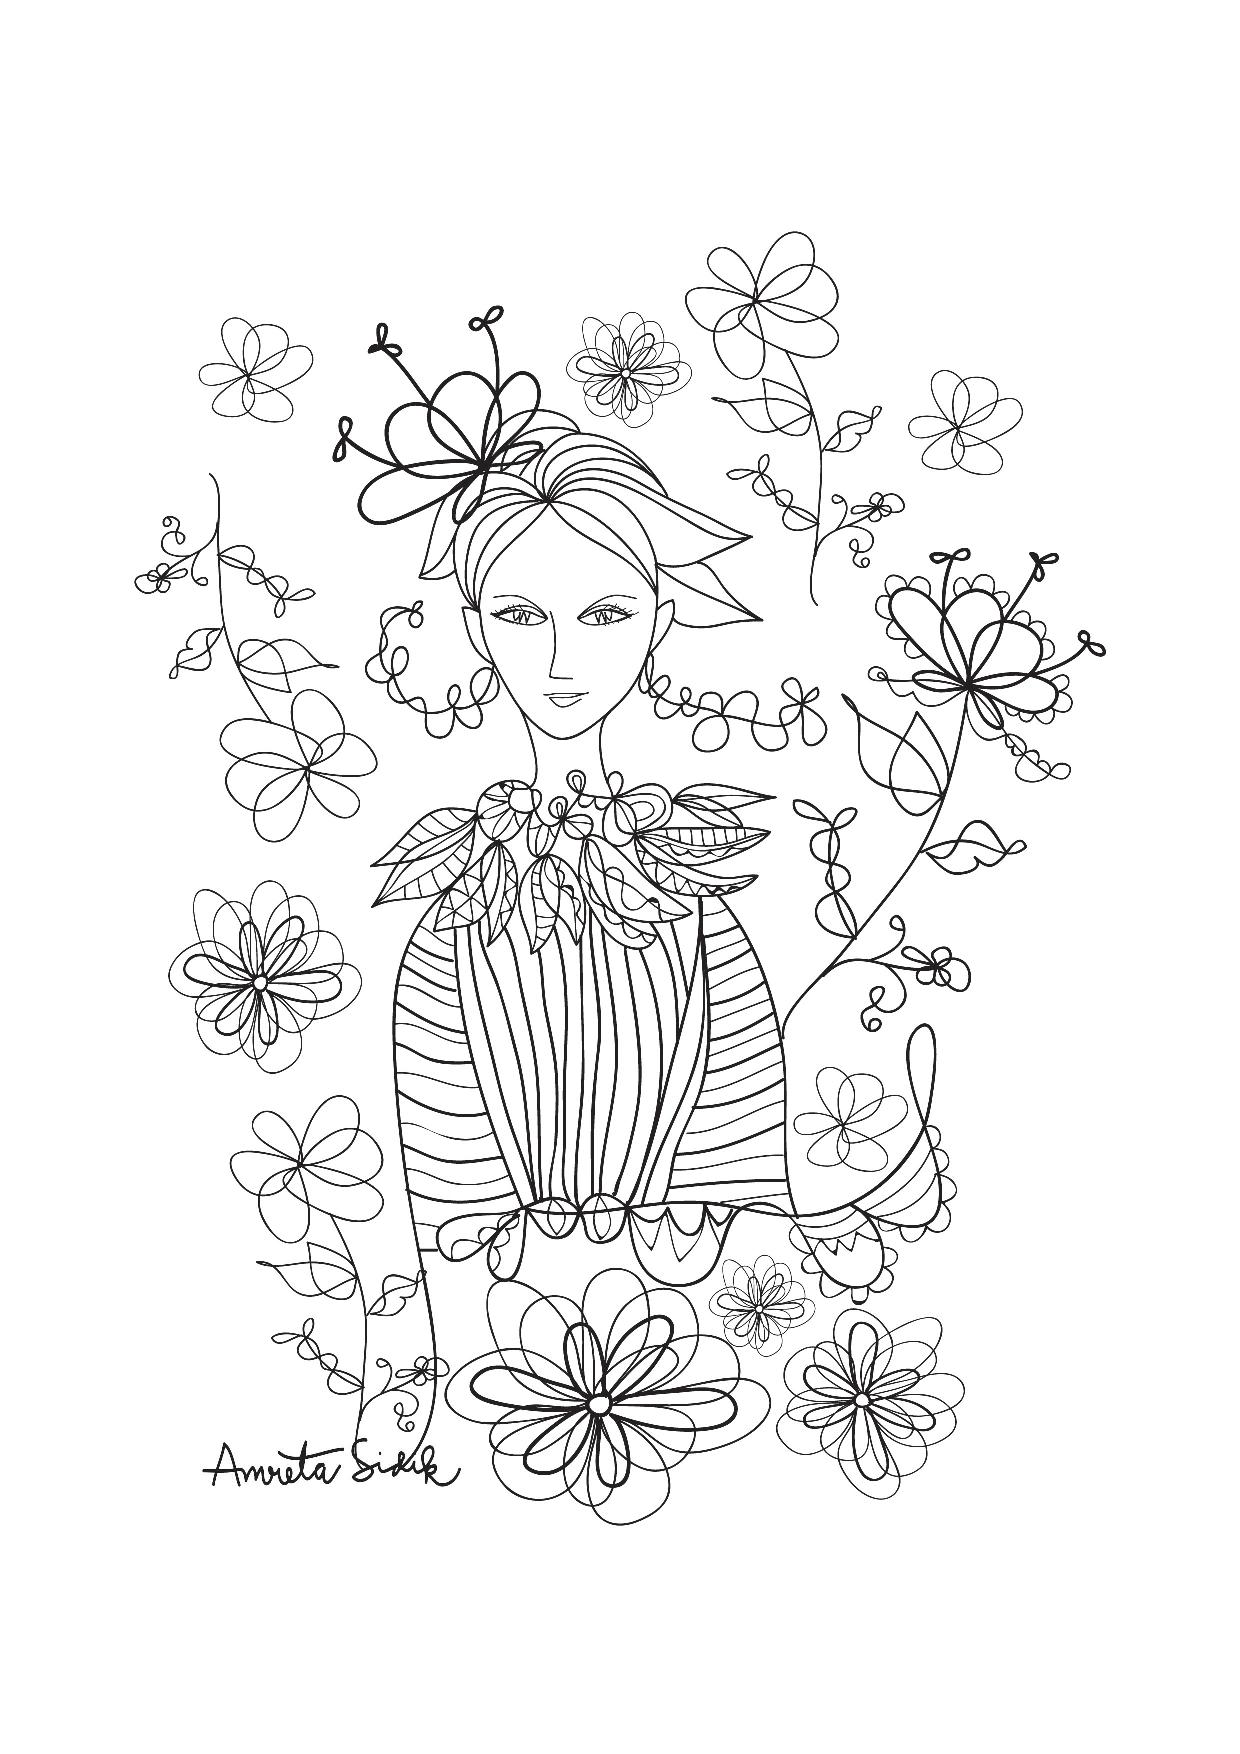 Flowers girl - 2 - Image with : Woman, Artist : Amreta Sidik